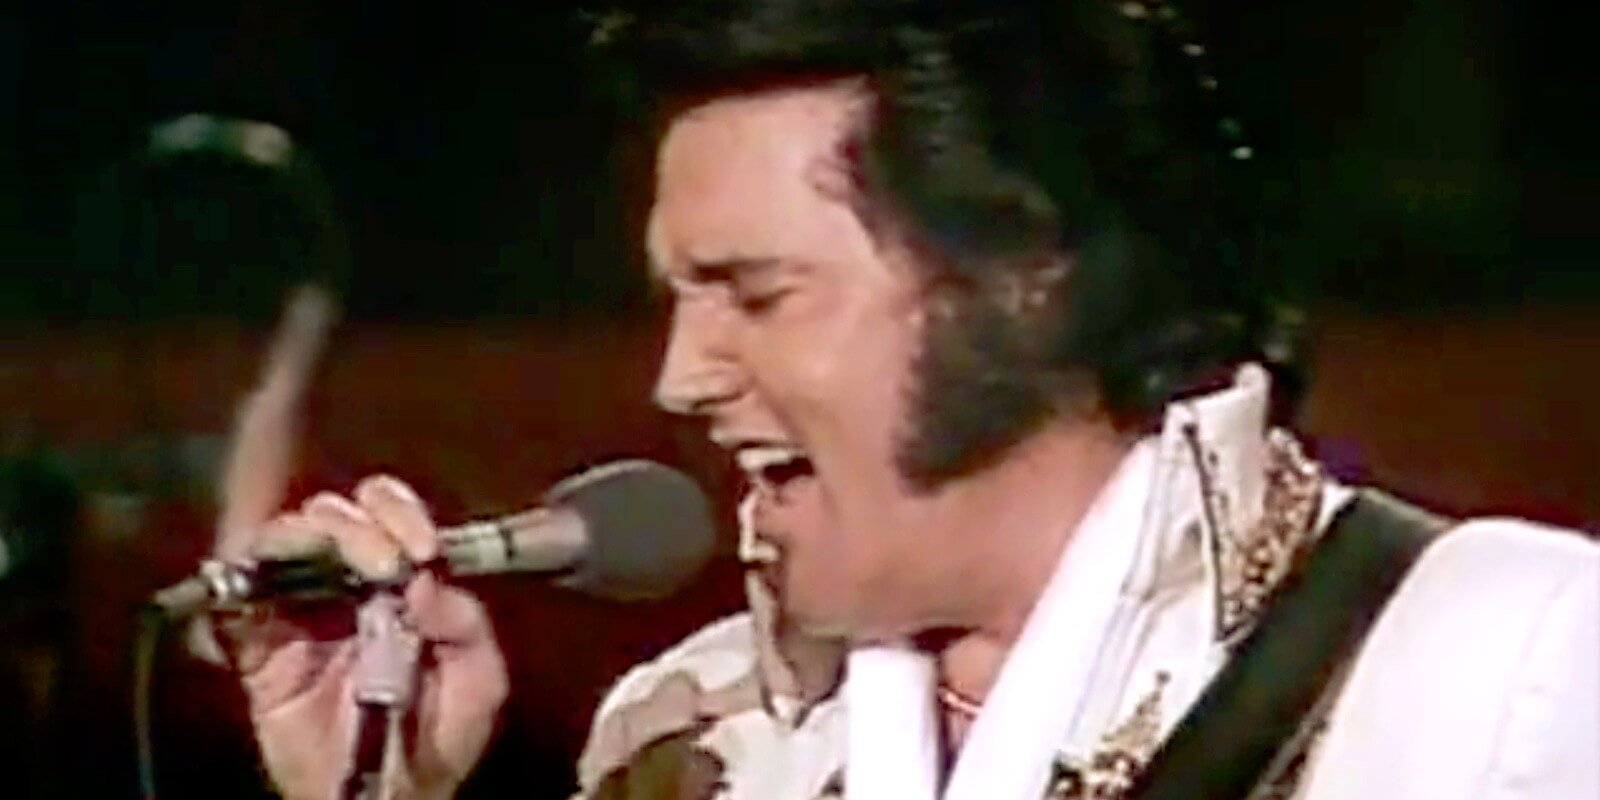 Elvis Presley in concert on June 21, 1977 in Rapid City, South Dakota